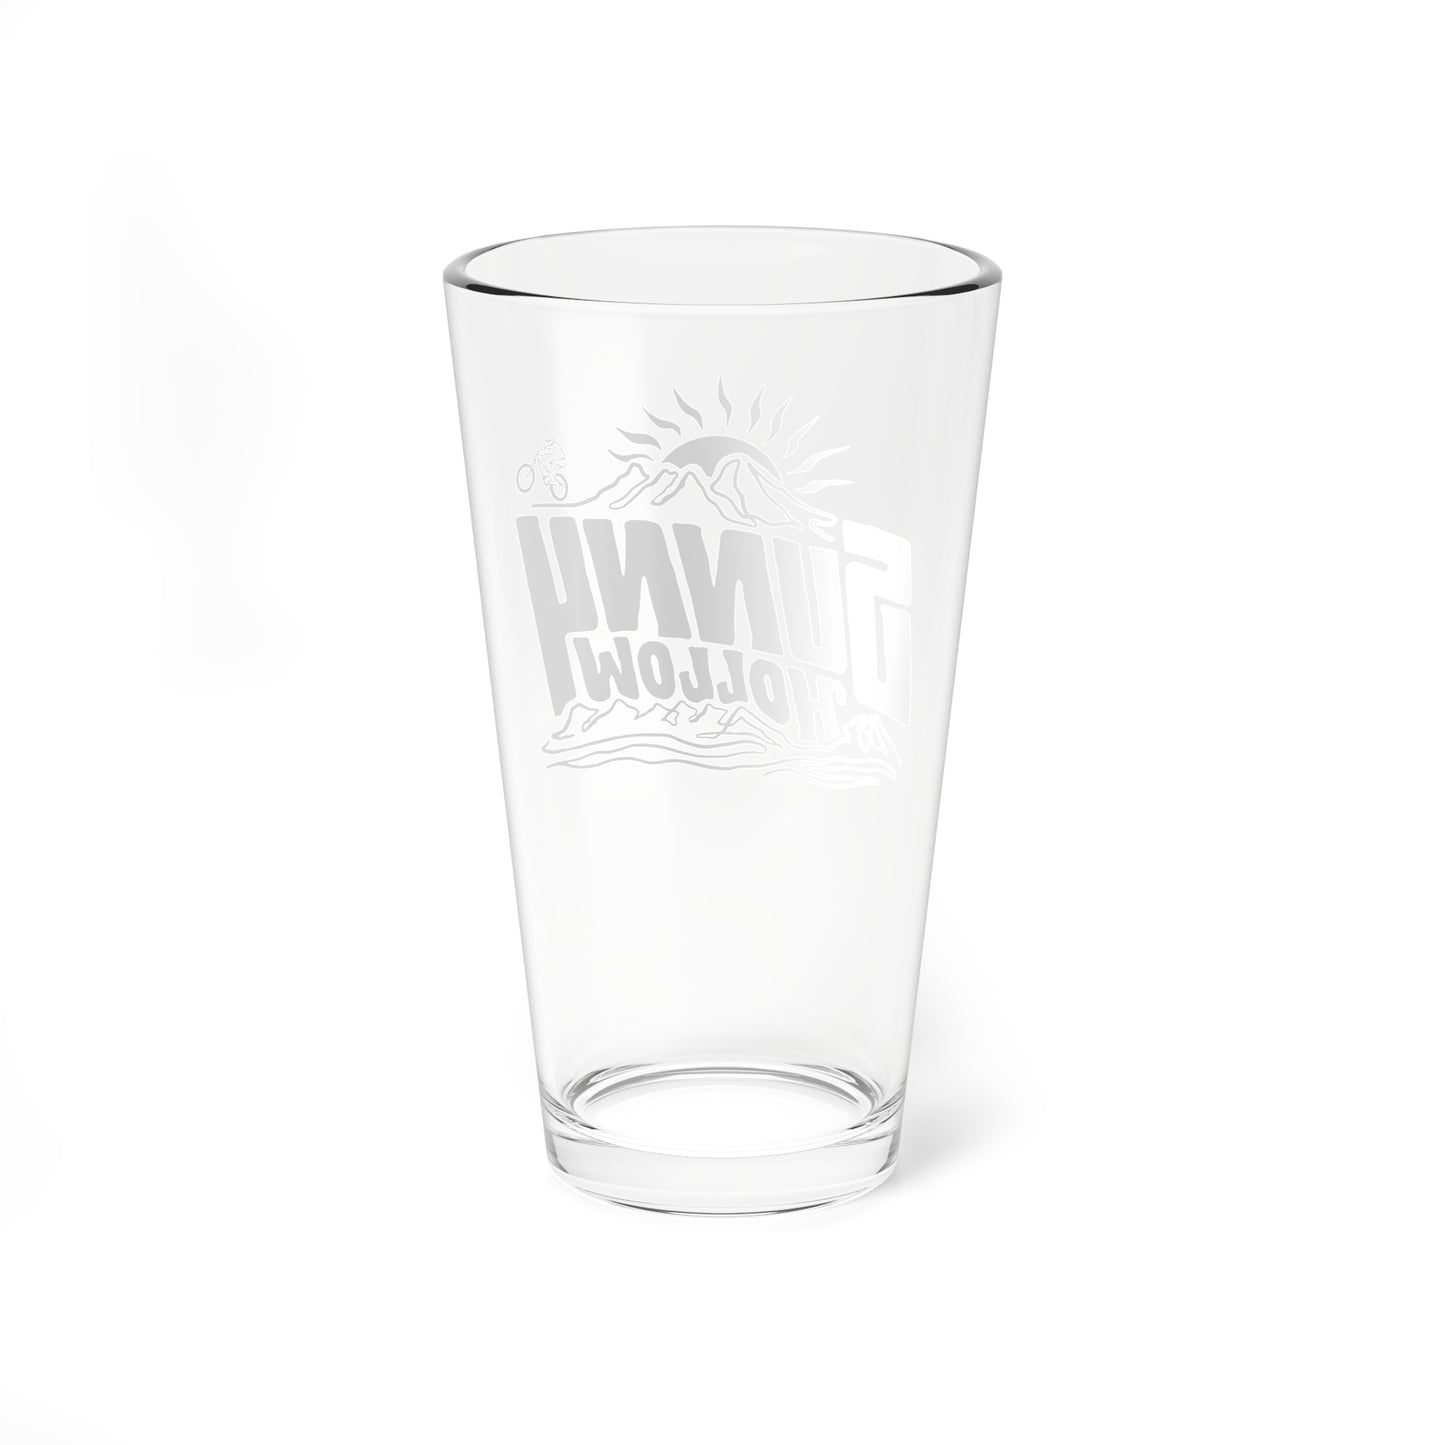 Sunny Hollow Pint Glass